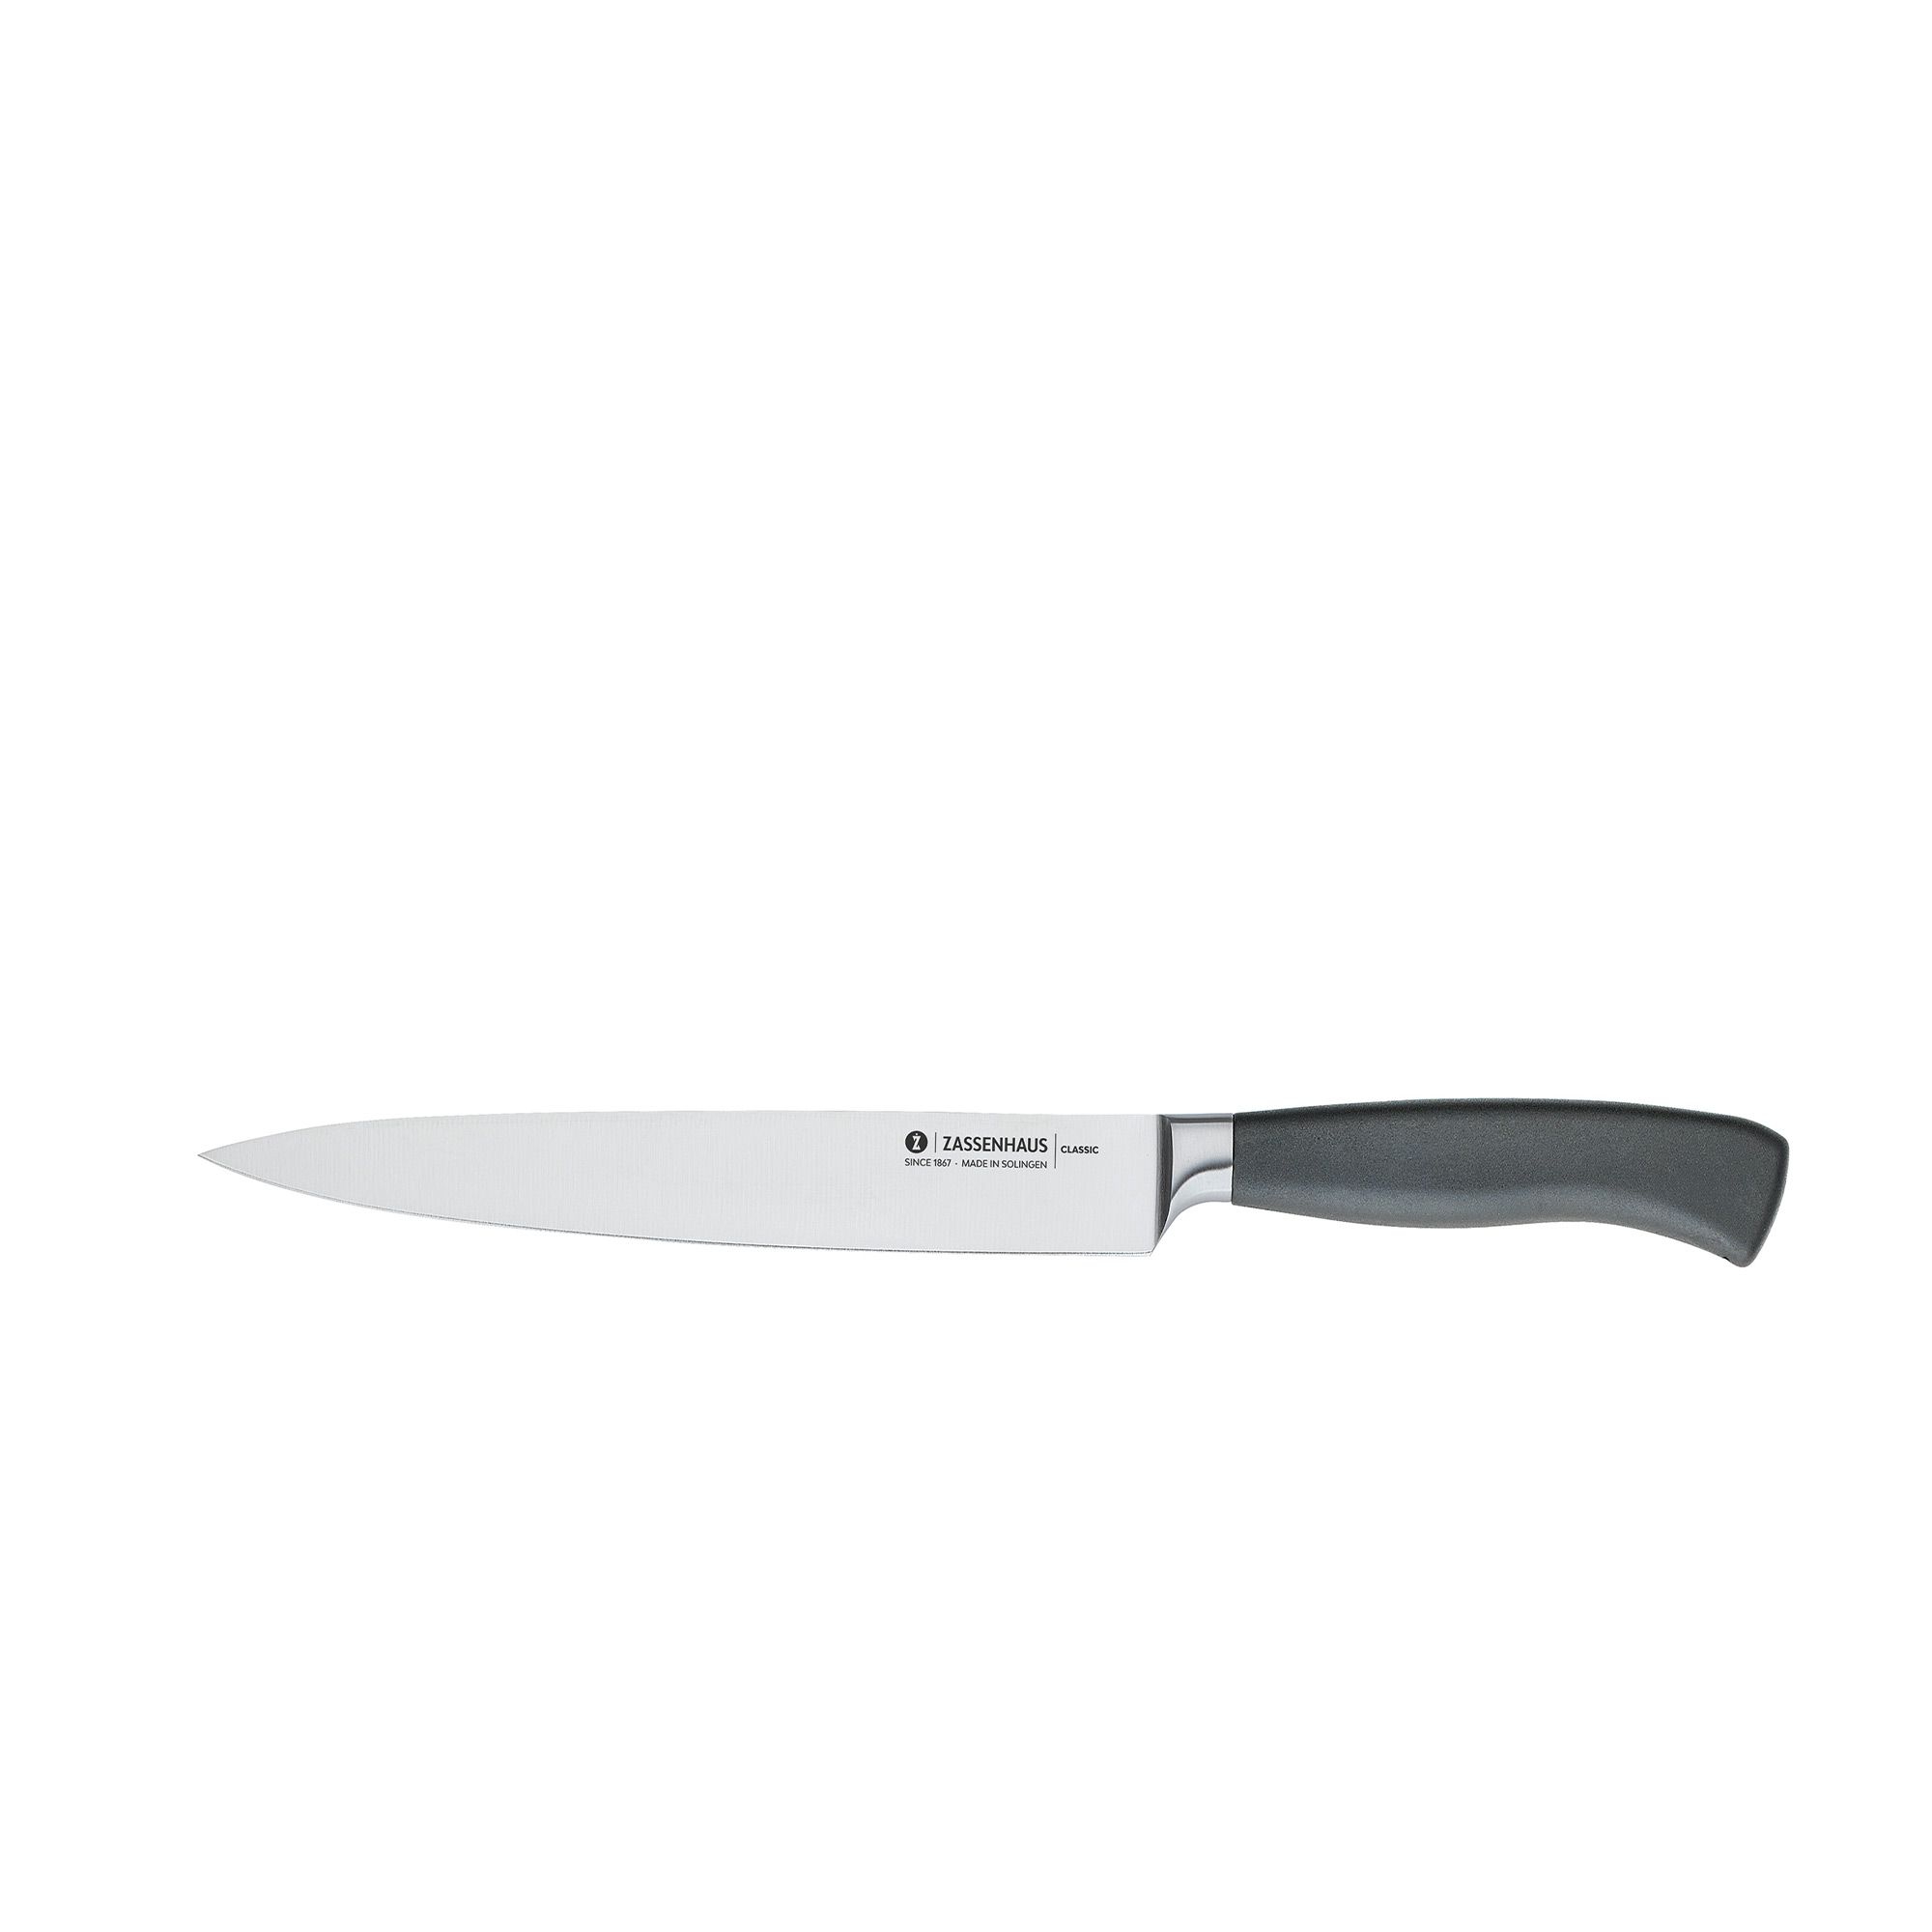 Zassenhaus - ham knife 21 cm - CLASSIC